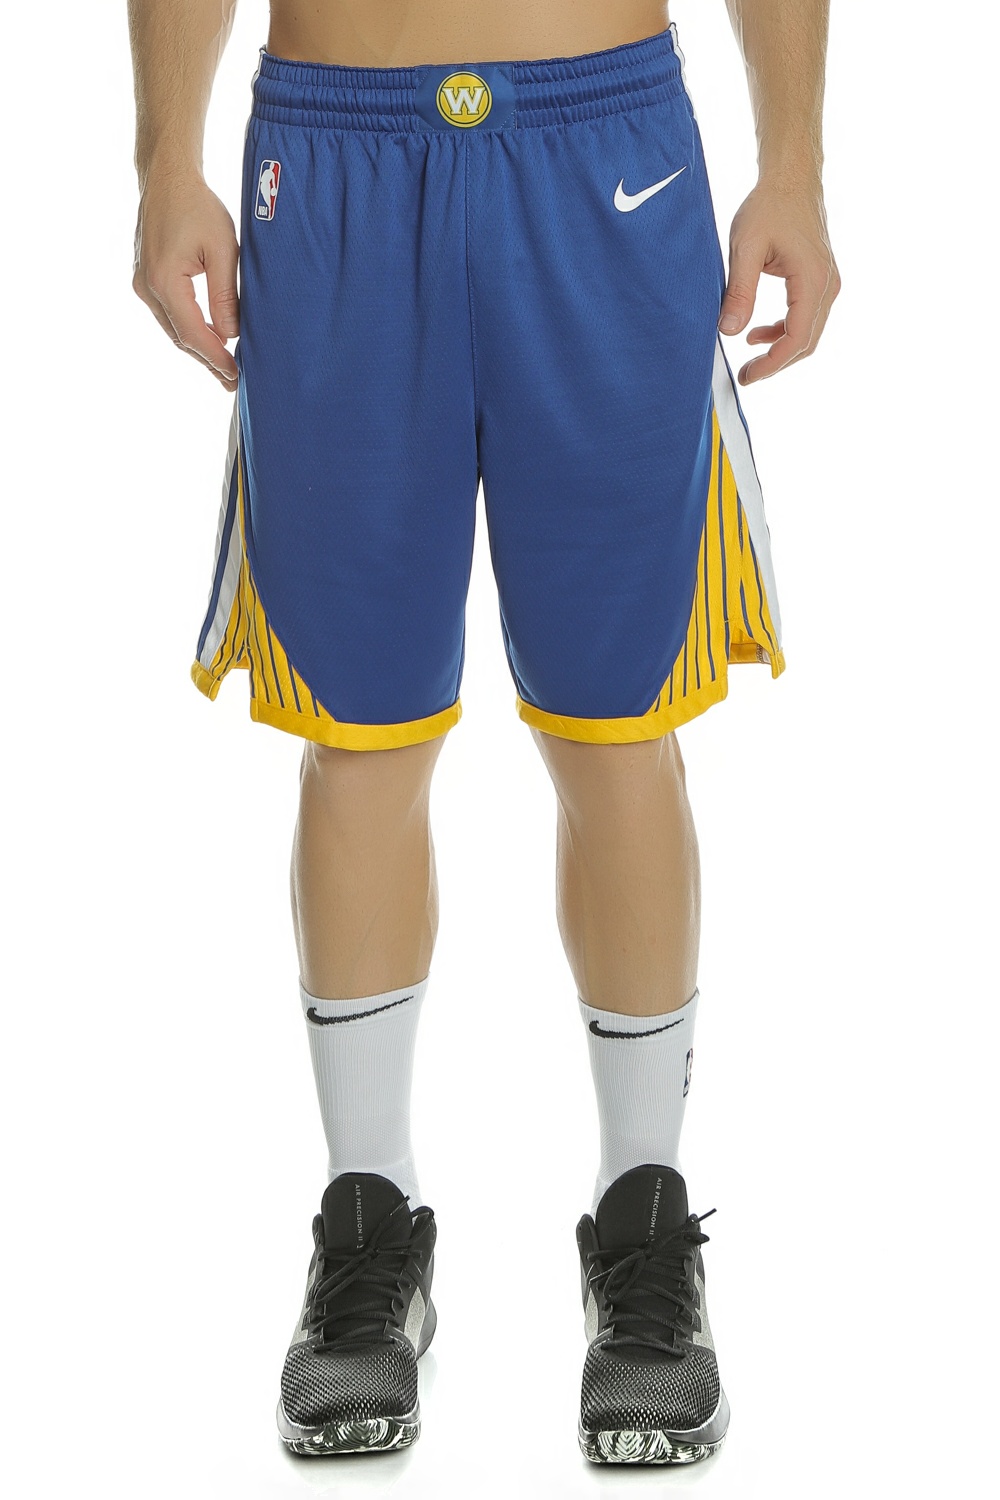 NIKE - Ανδρικό σορτς Nike NBA Golden State Warriors Swingman μπλε